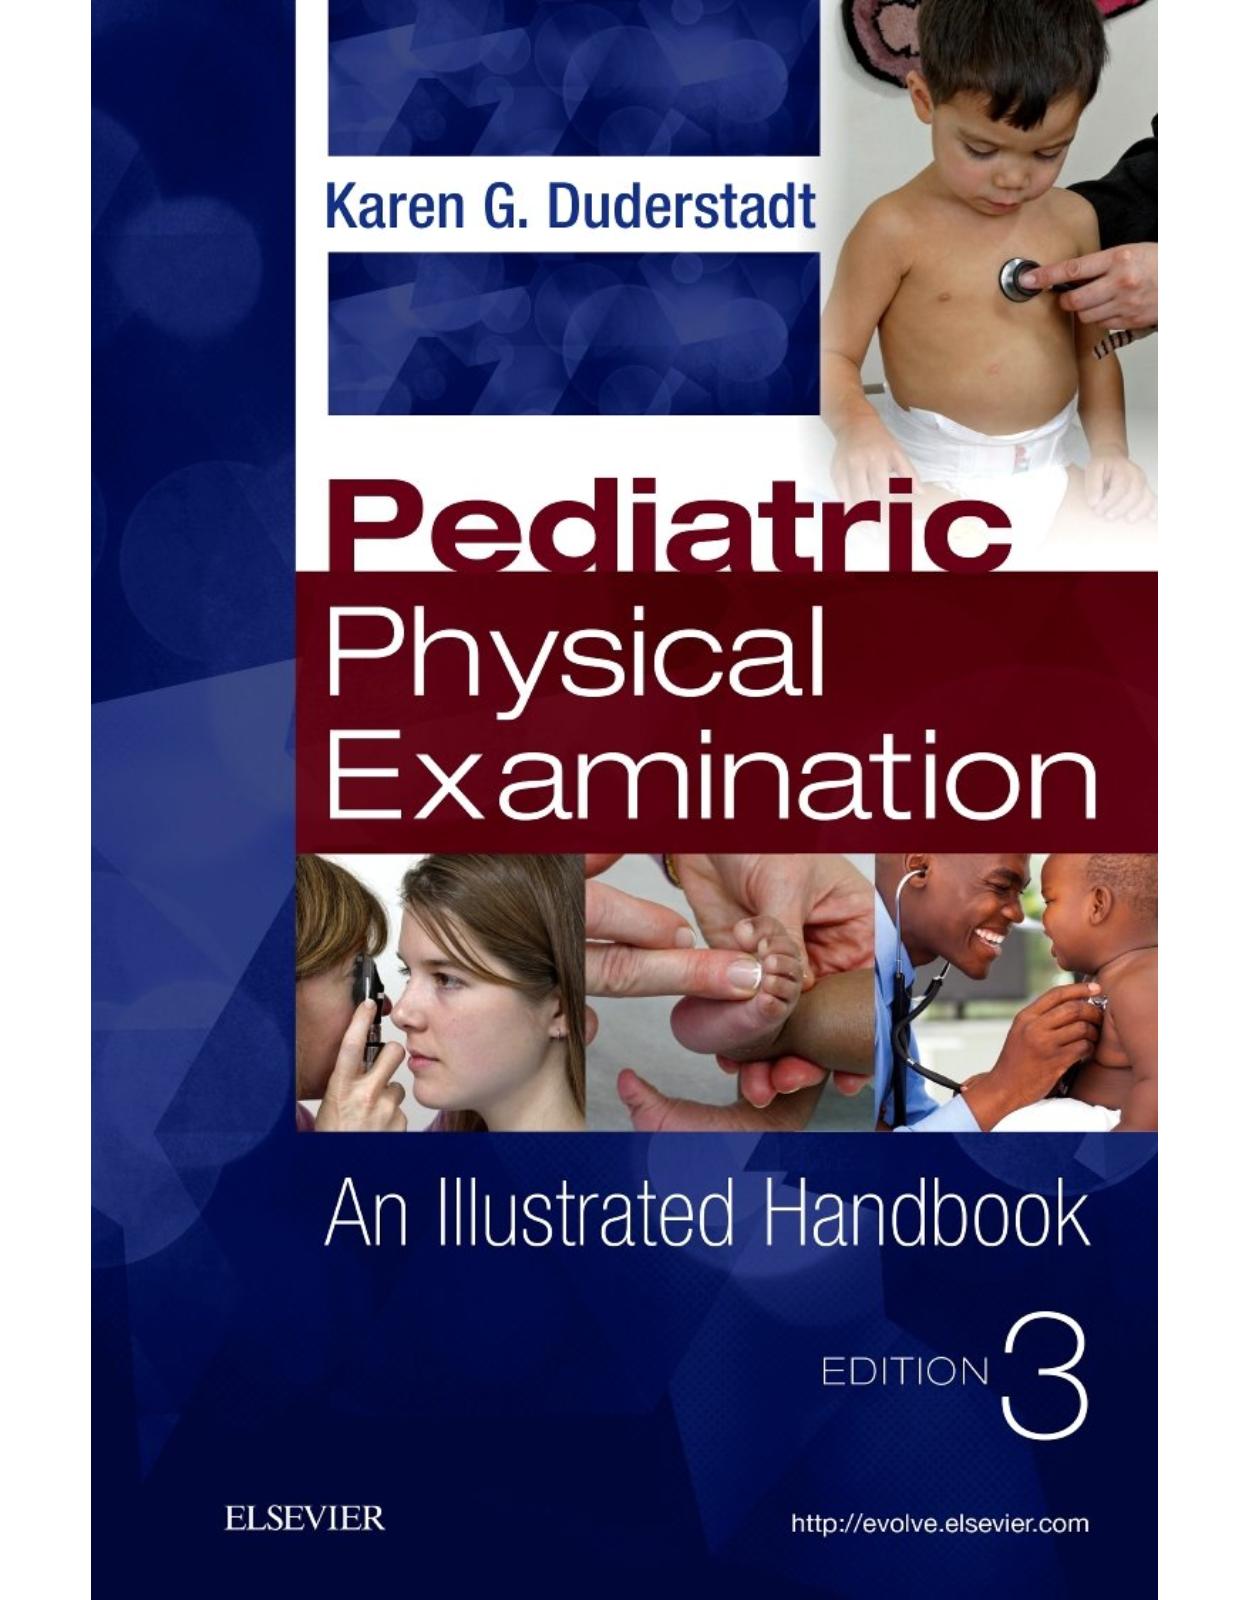 Pediatric Physical Examination: An Illustrated Handbook, 3e